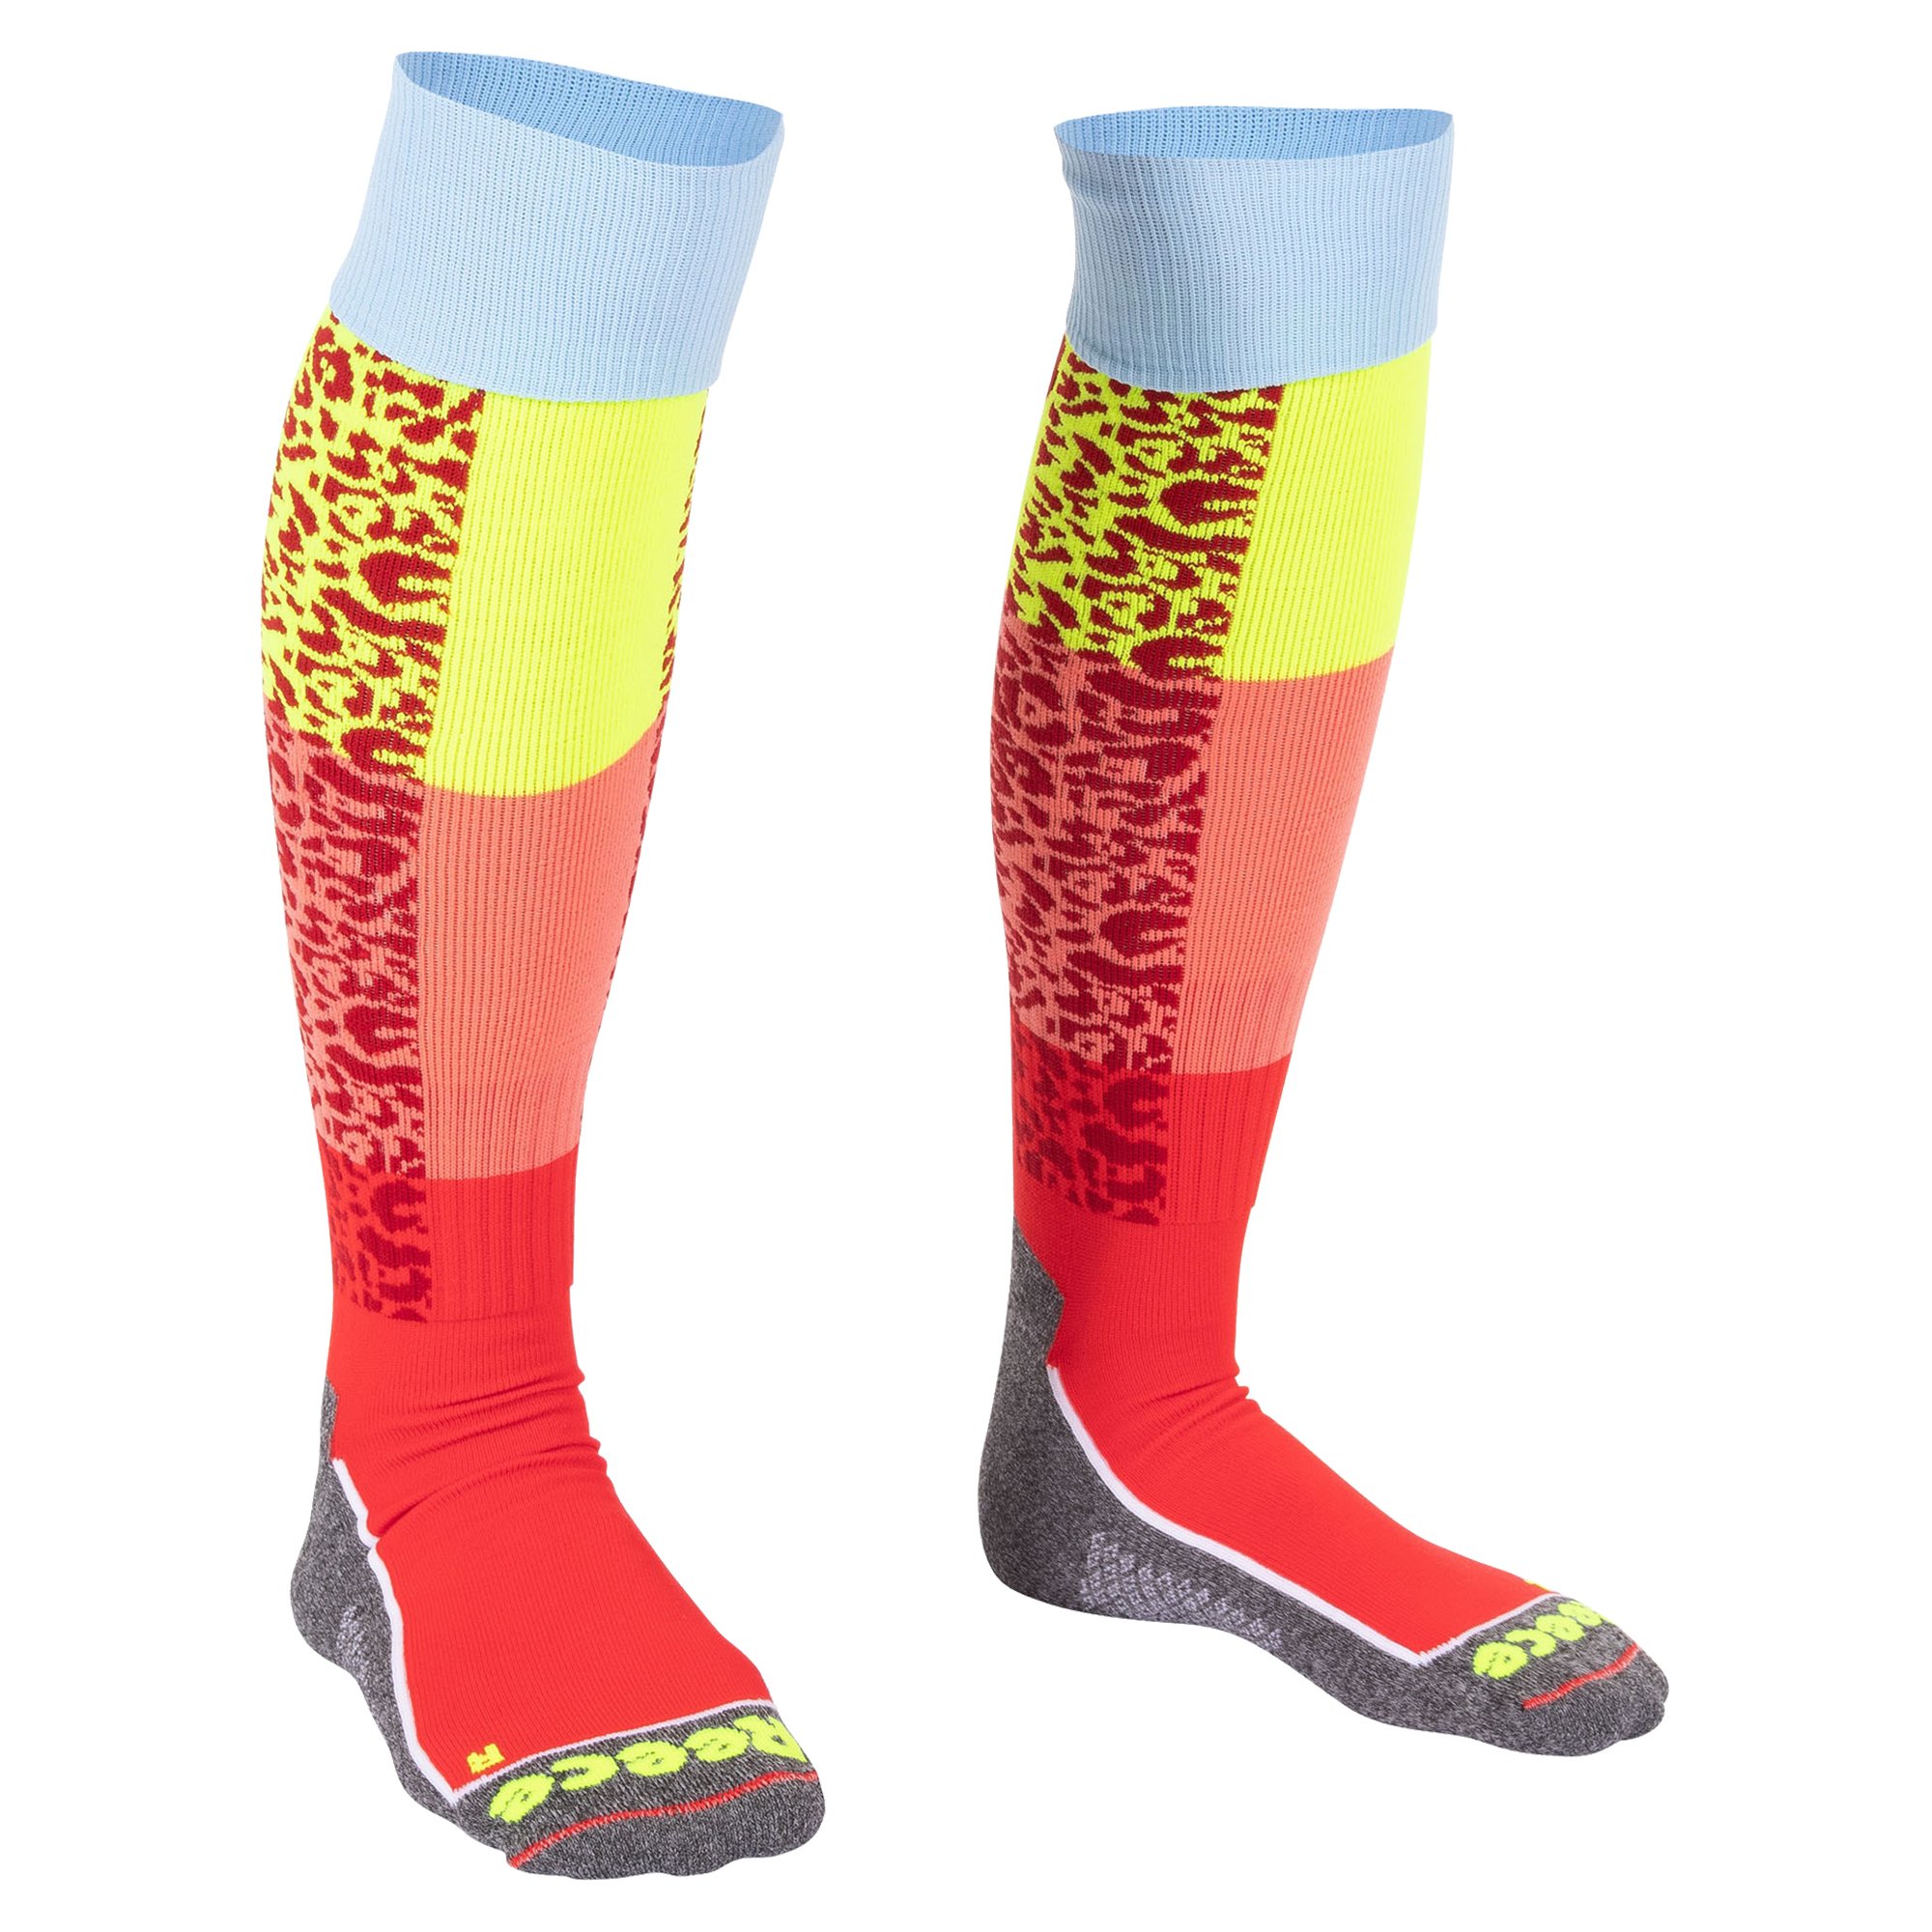 Reece Australia Oxley Socks